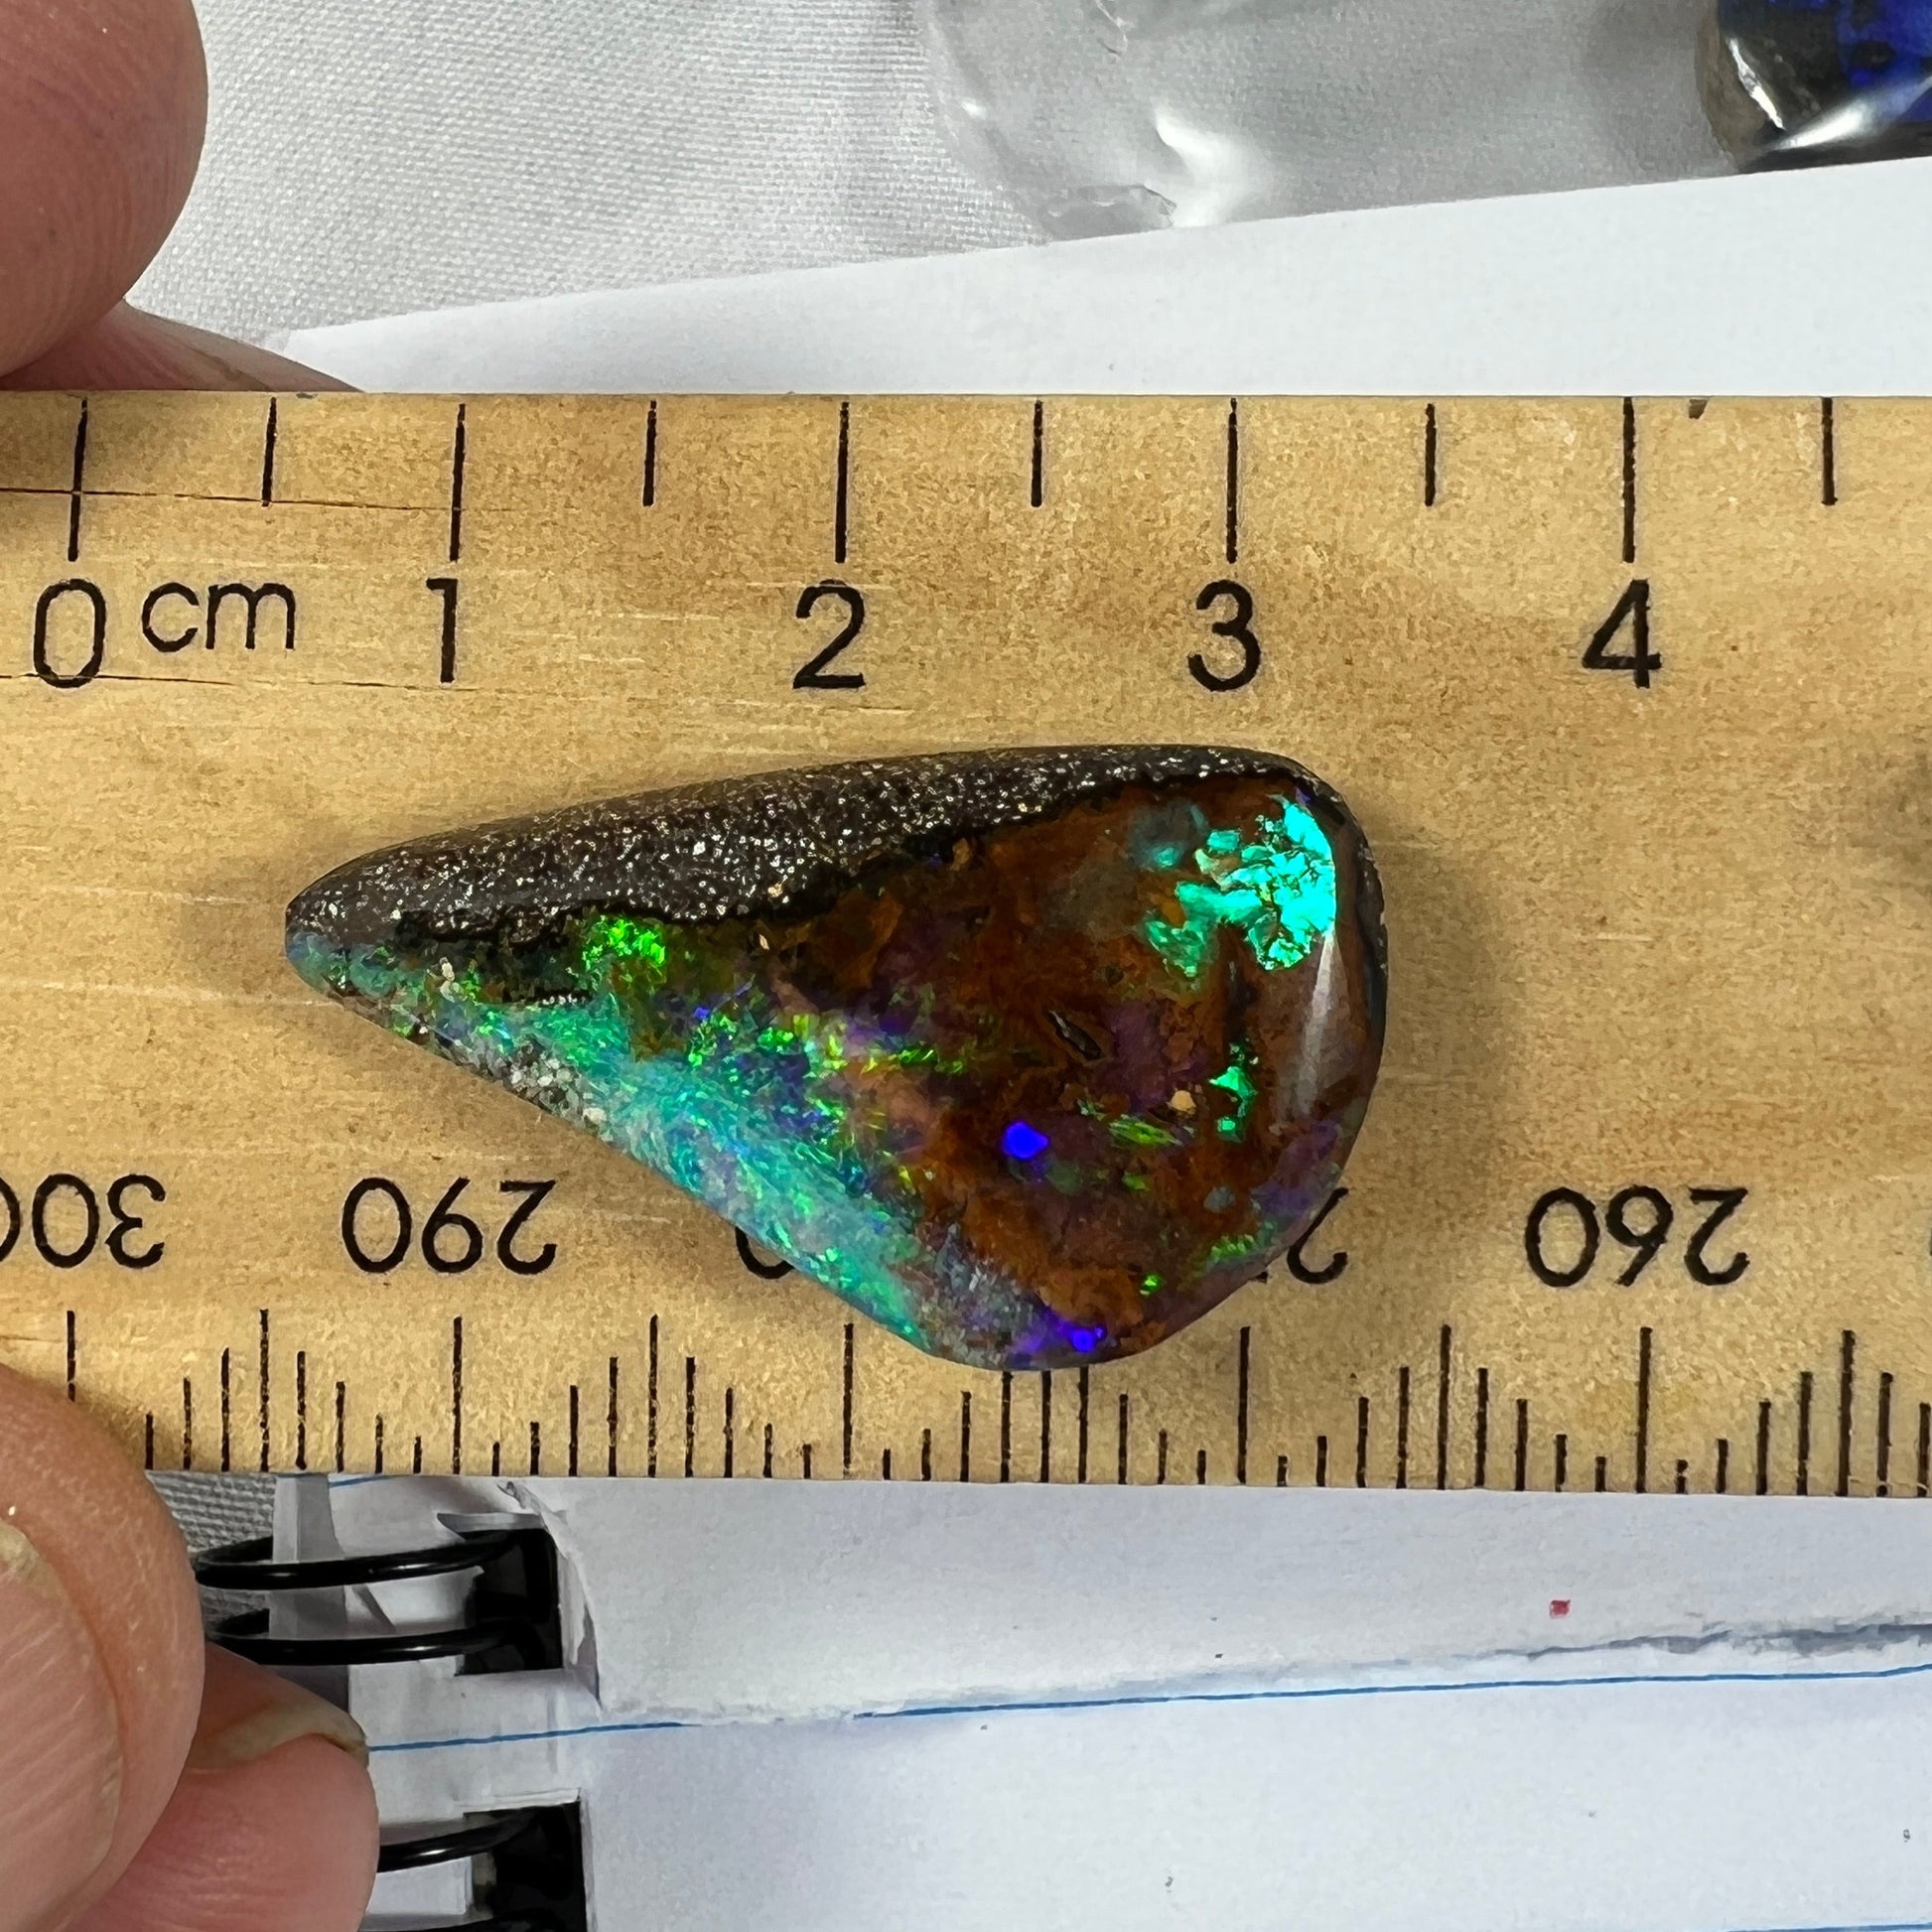 An absolute beauty from Winton. Stunning piece of boulder opal.